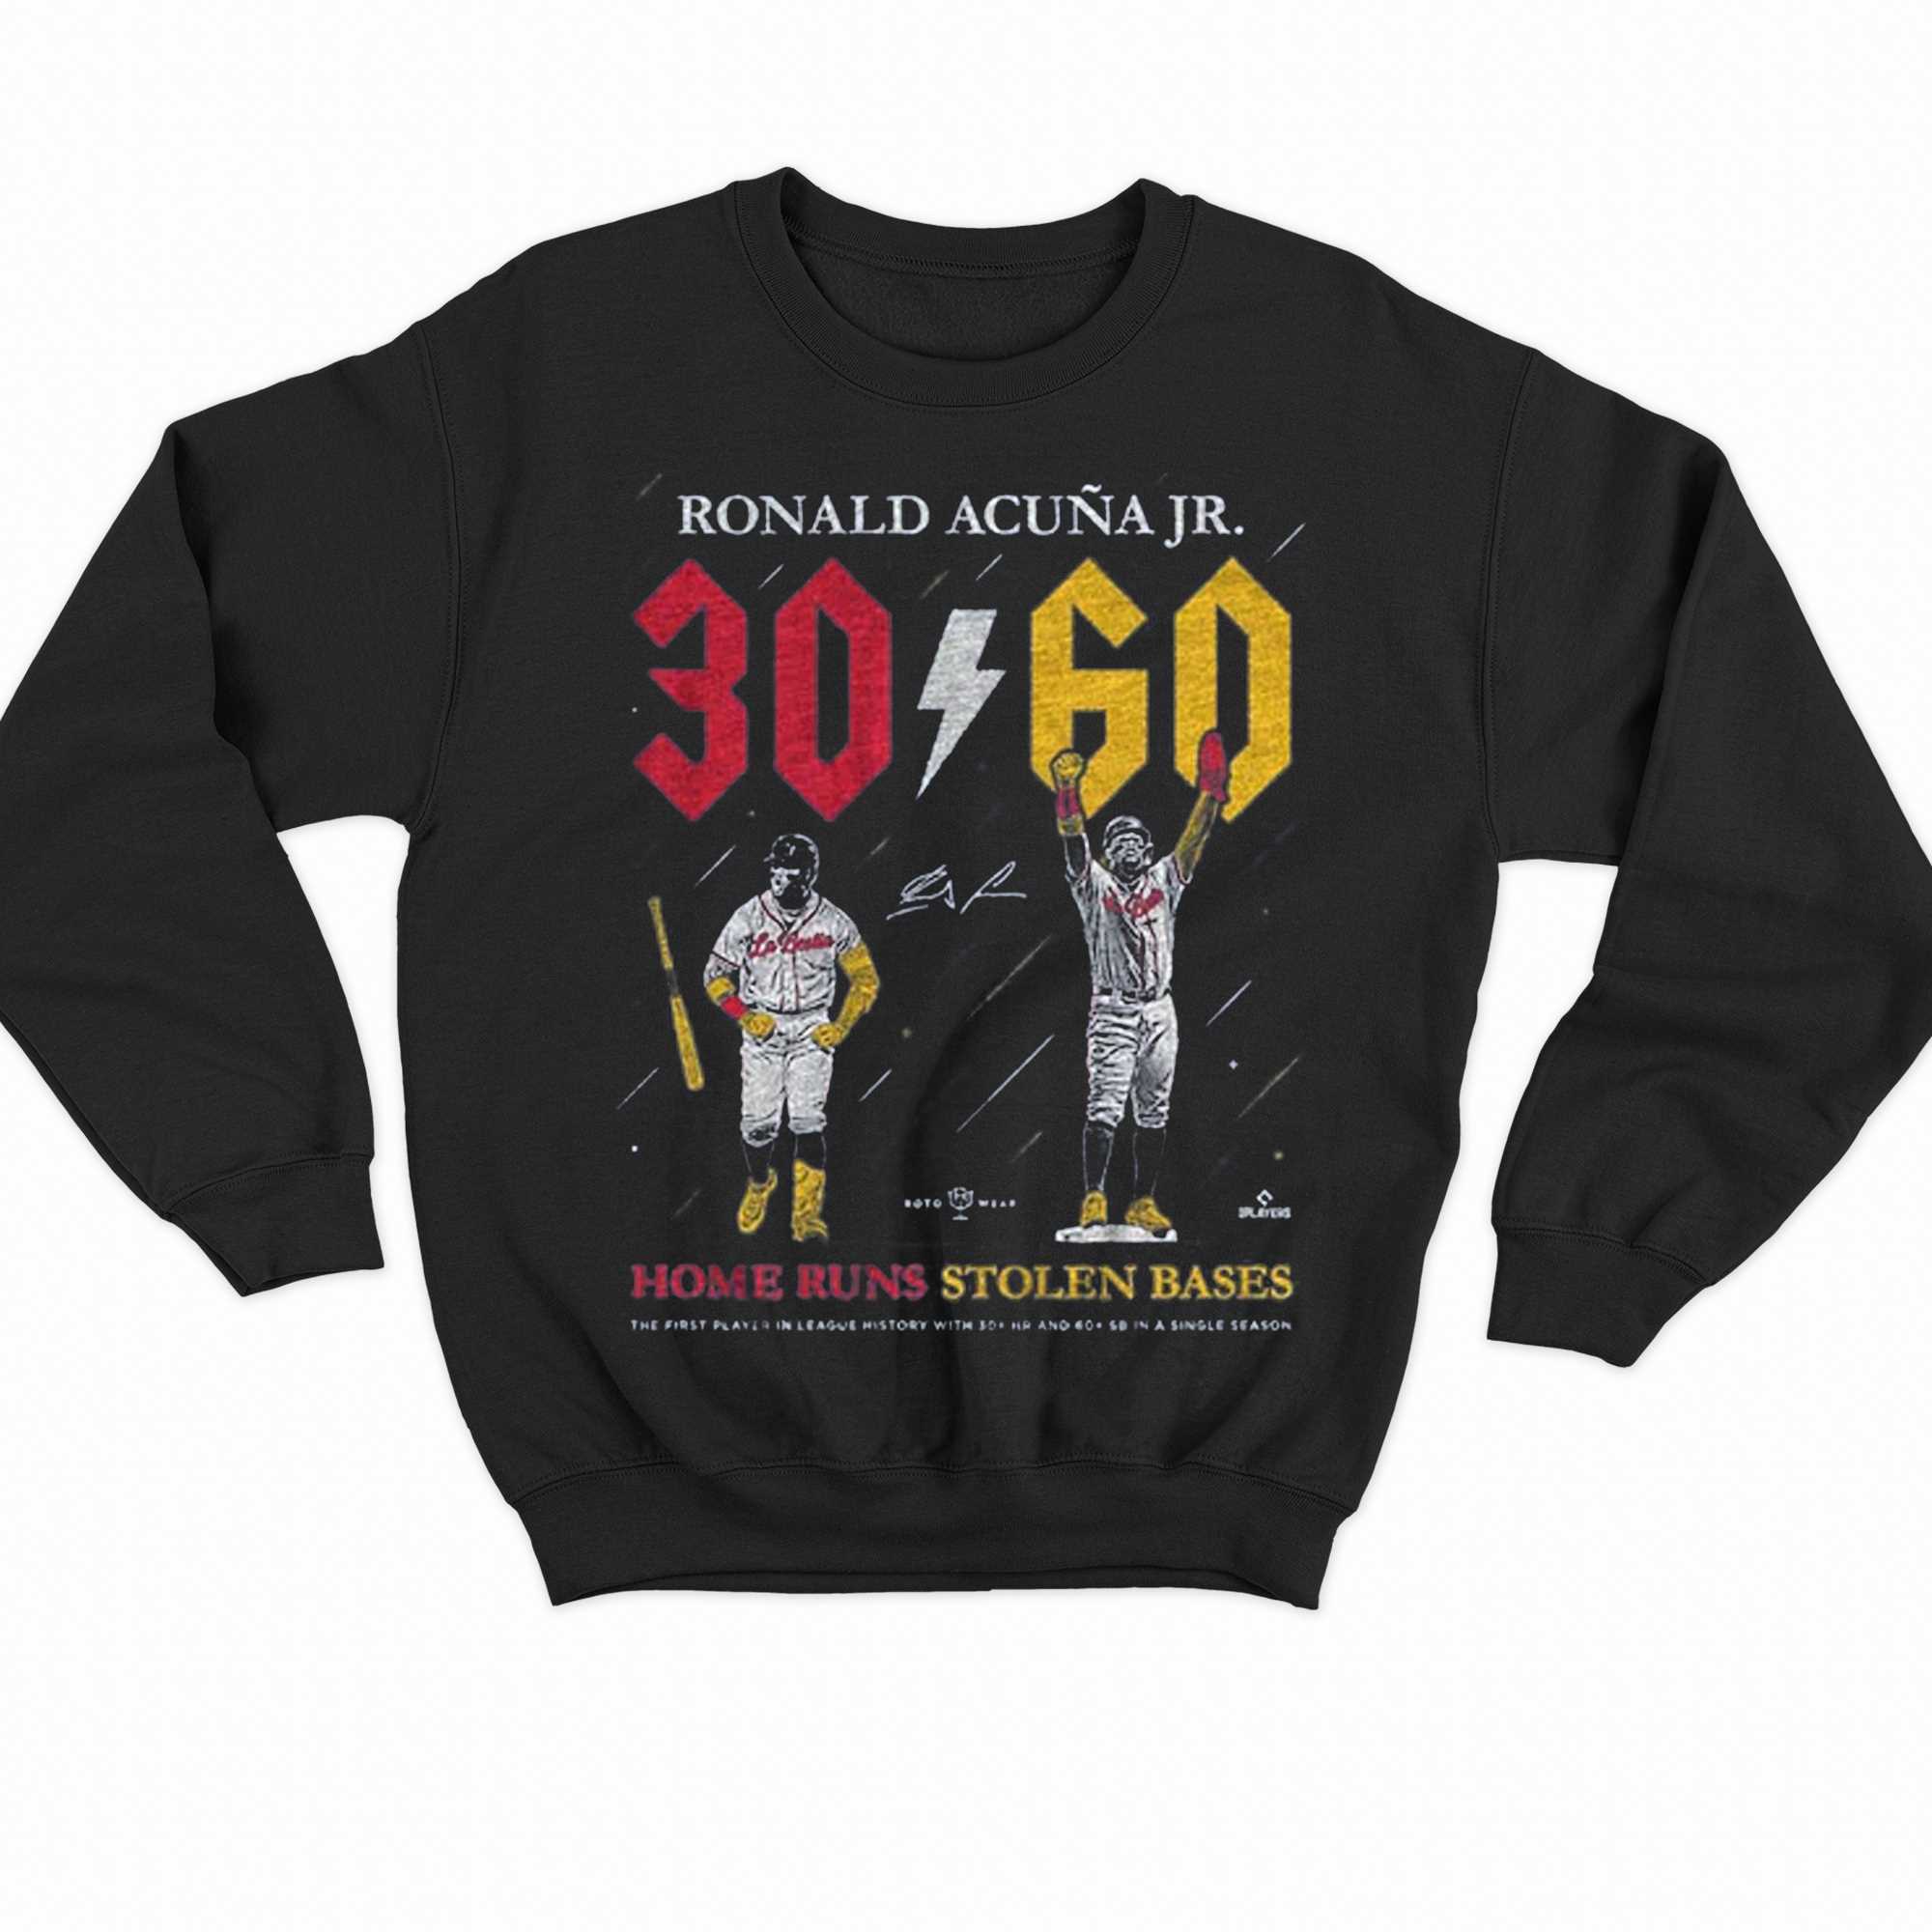 Ronald Acuna Jr 30 60 T-shirt - Shibtee Clothing